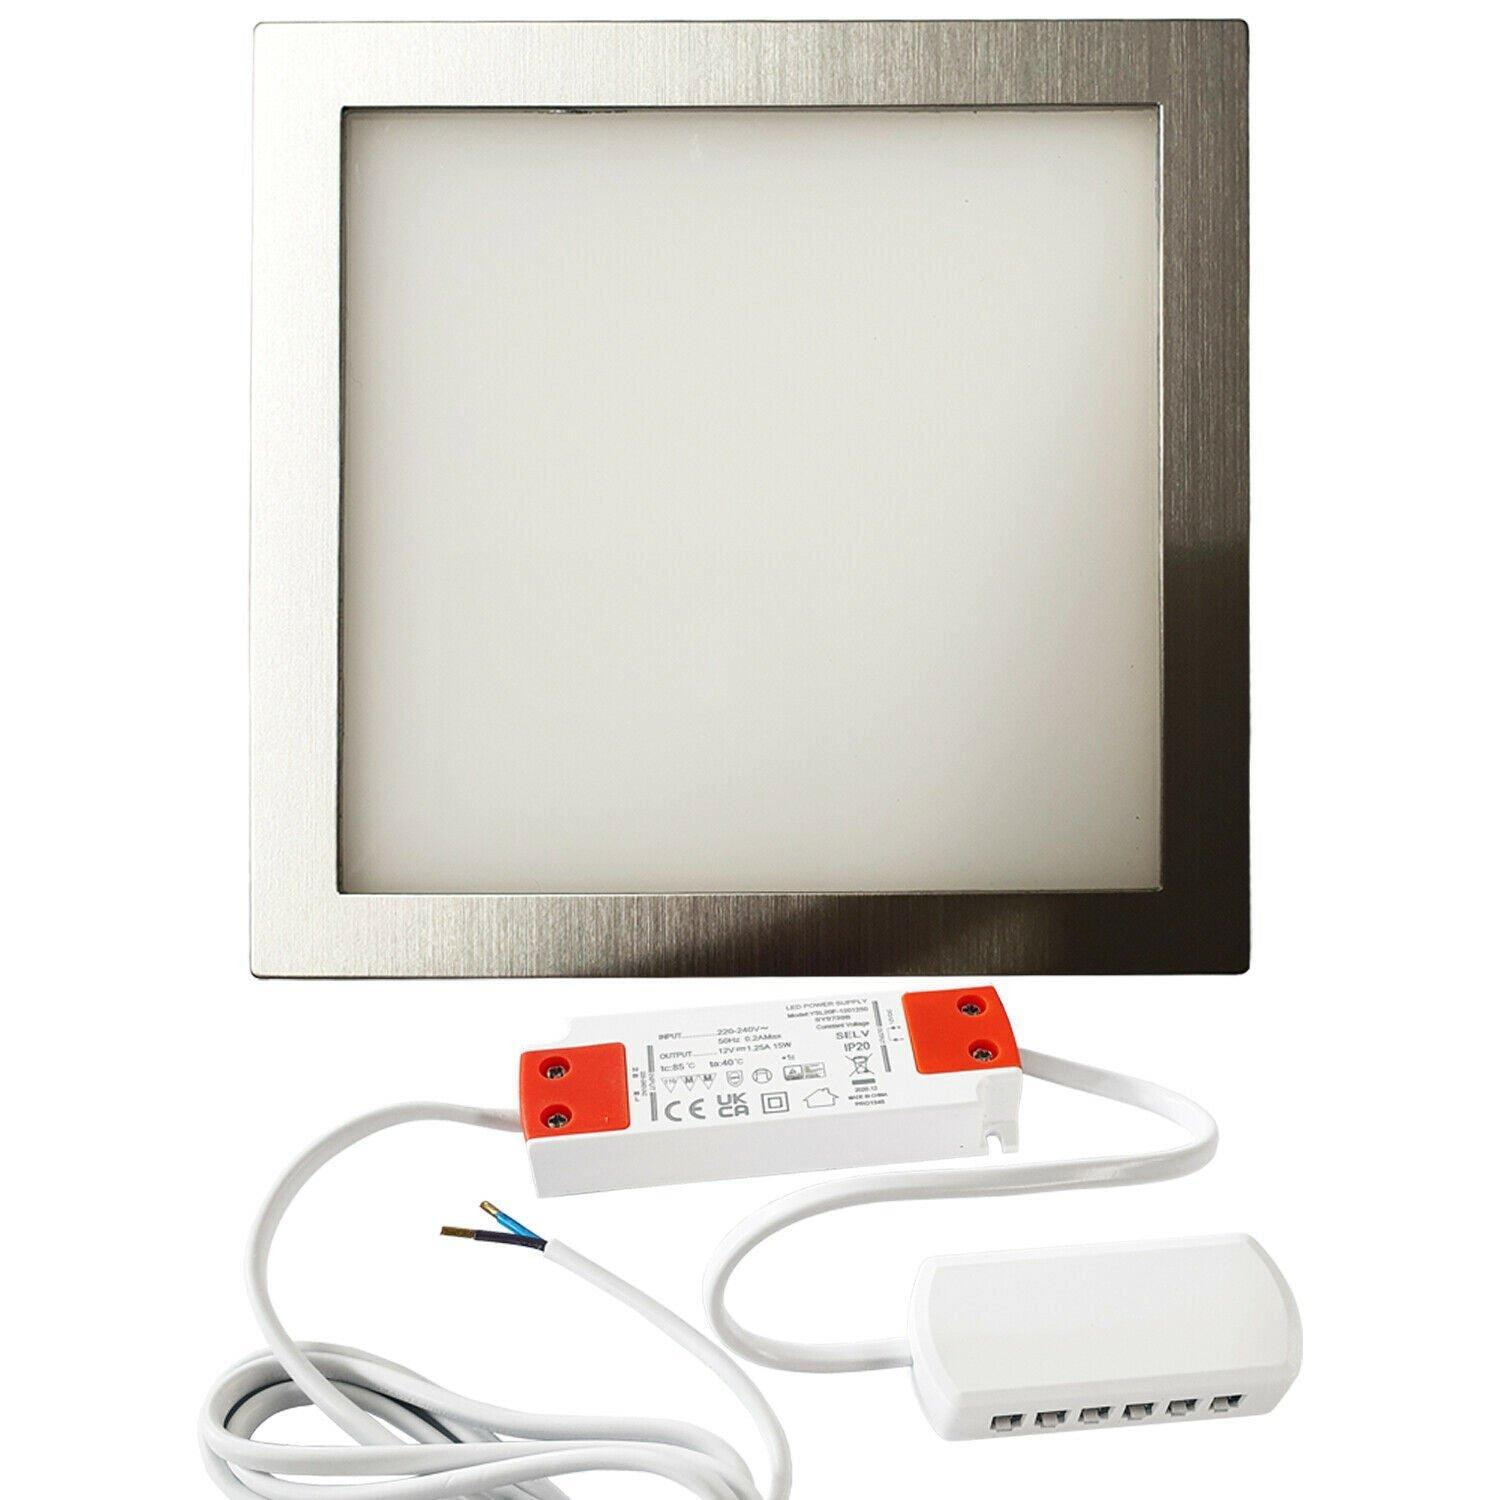 1x BRUSHED NICKEL Ultra-Slim Square Under Cabinet Kitchen Light & Driver Kit - Natural White LED - image 1